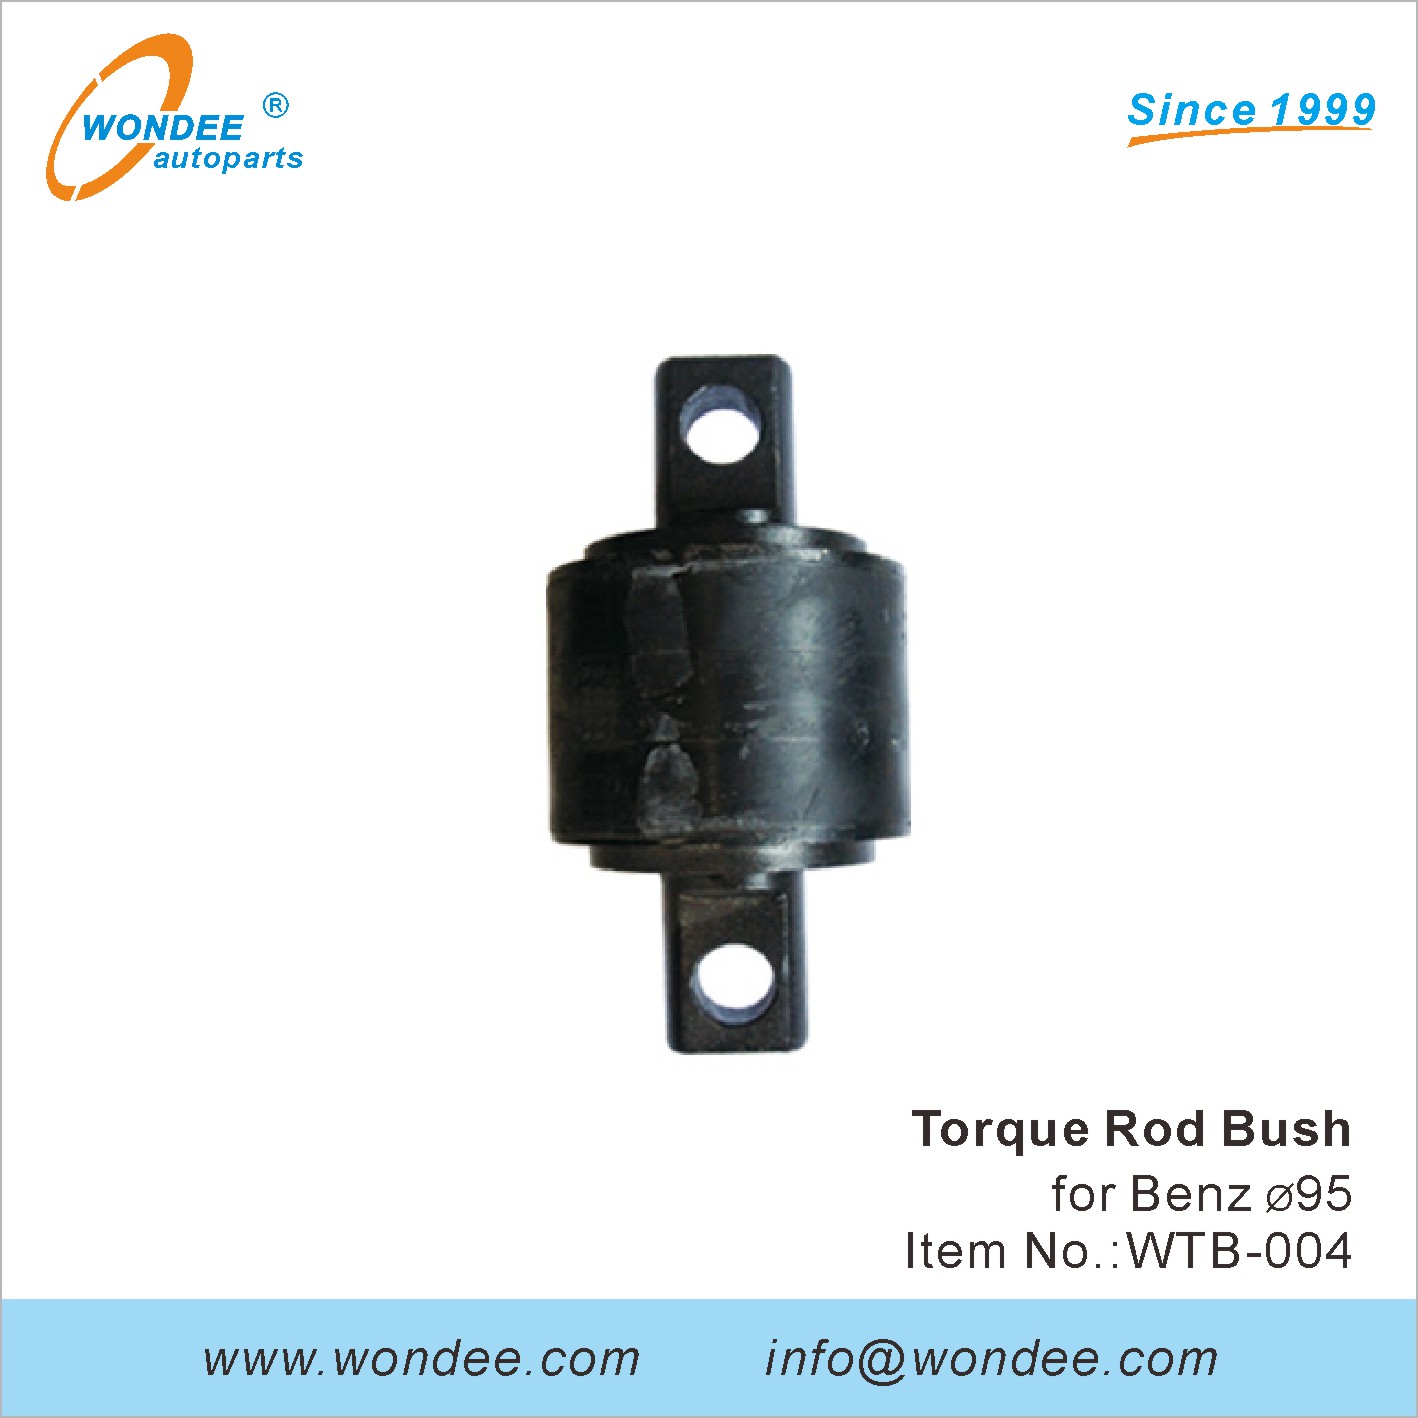 WONDEE torque rod bush (4)